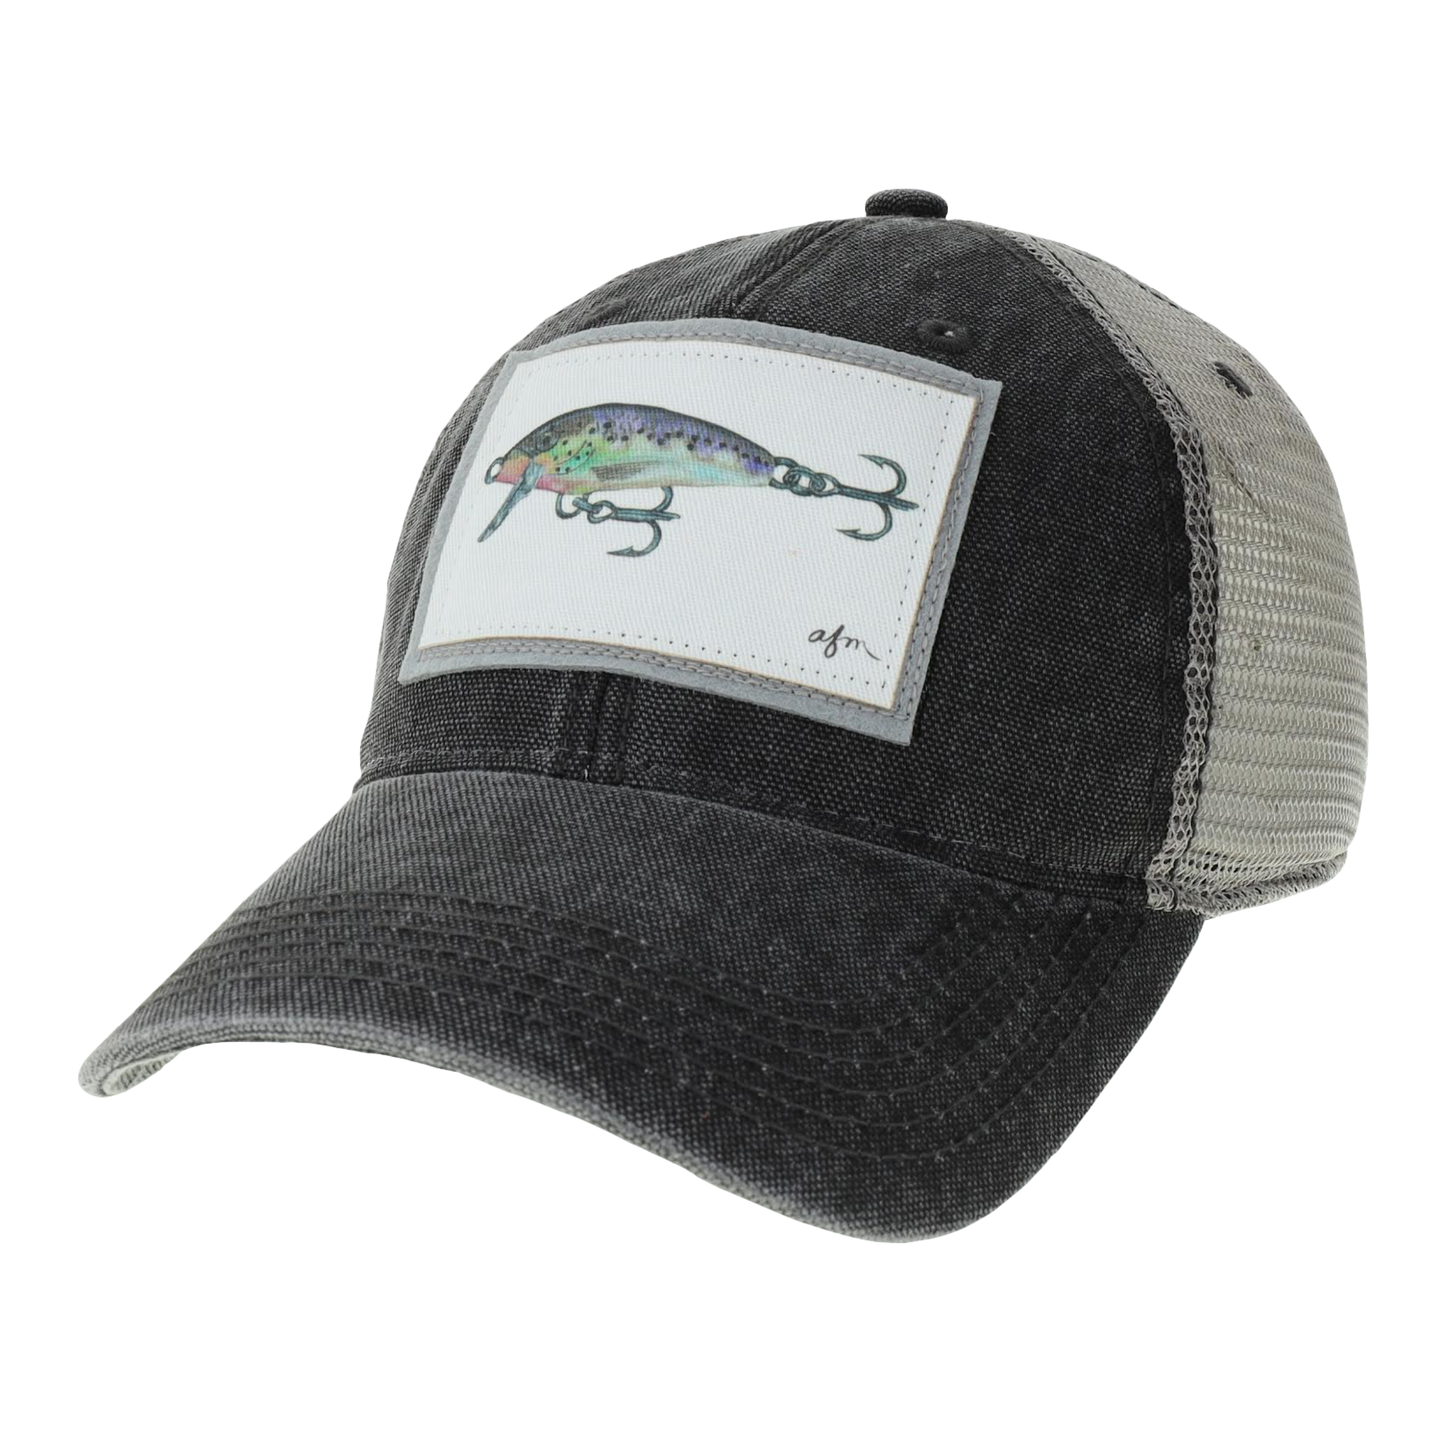 Minnow Lure Dashboard Trucker Hat in Black/Grey